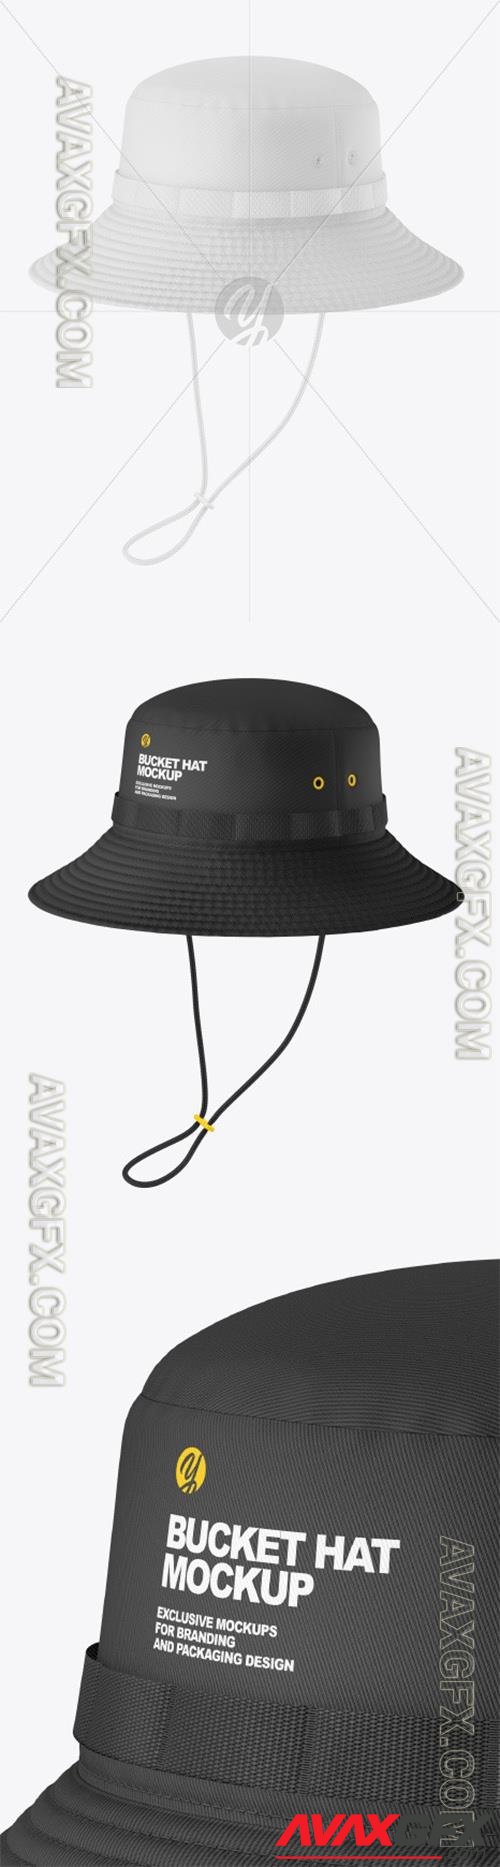 Bucket Hat with Wide Brim Mockup 83502